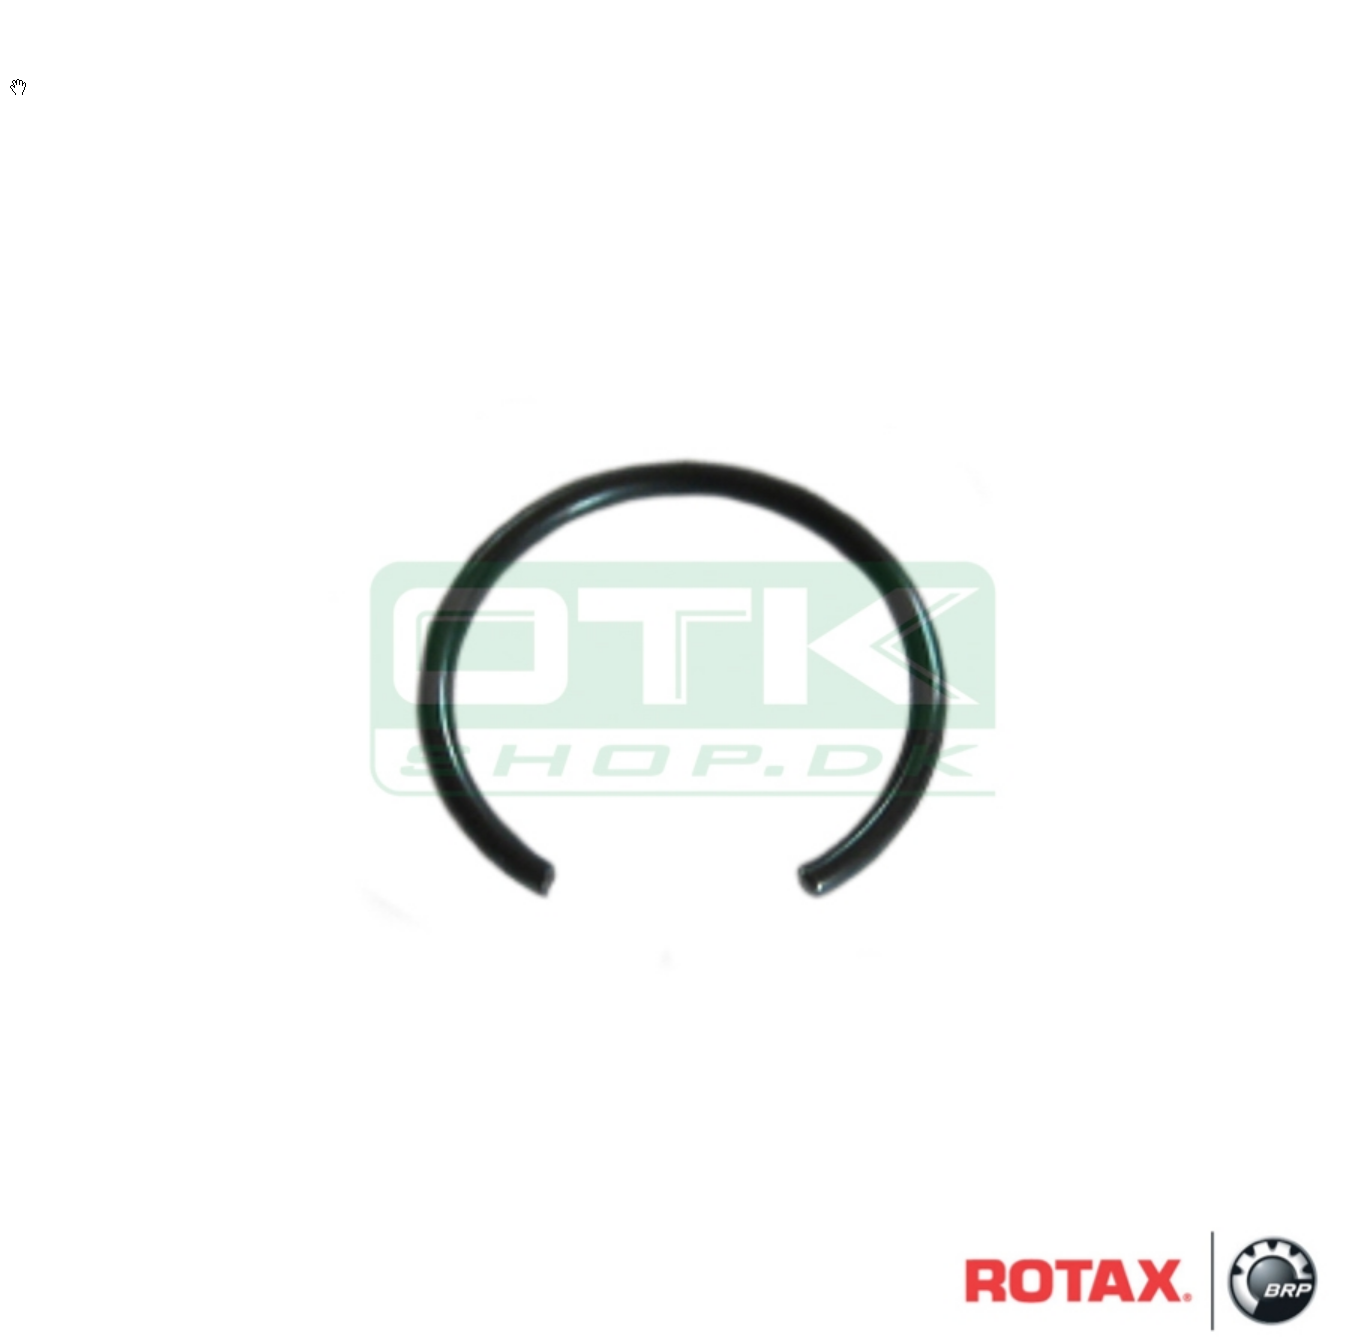 ROTAX Piston Pin (For all EVO Pistons)